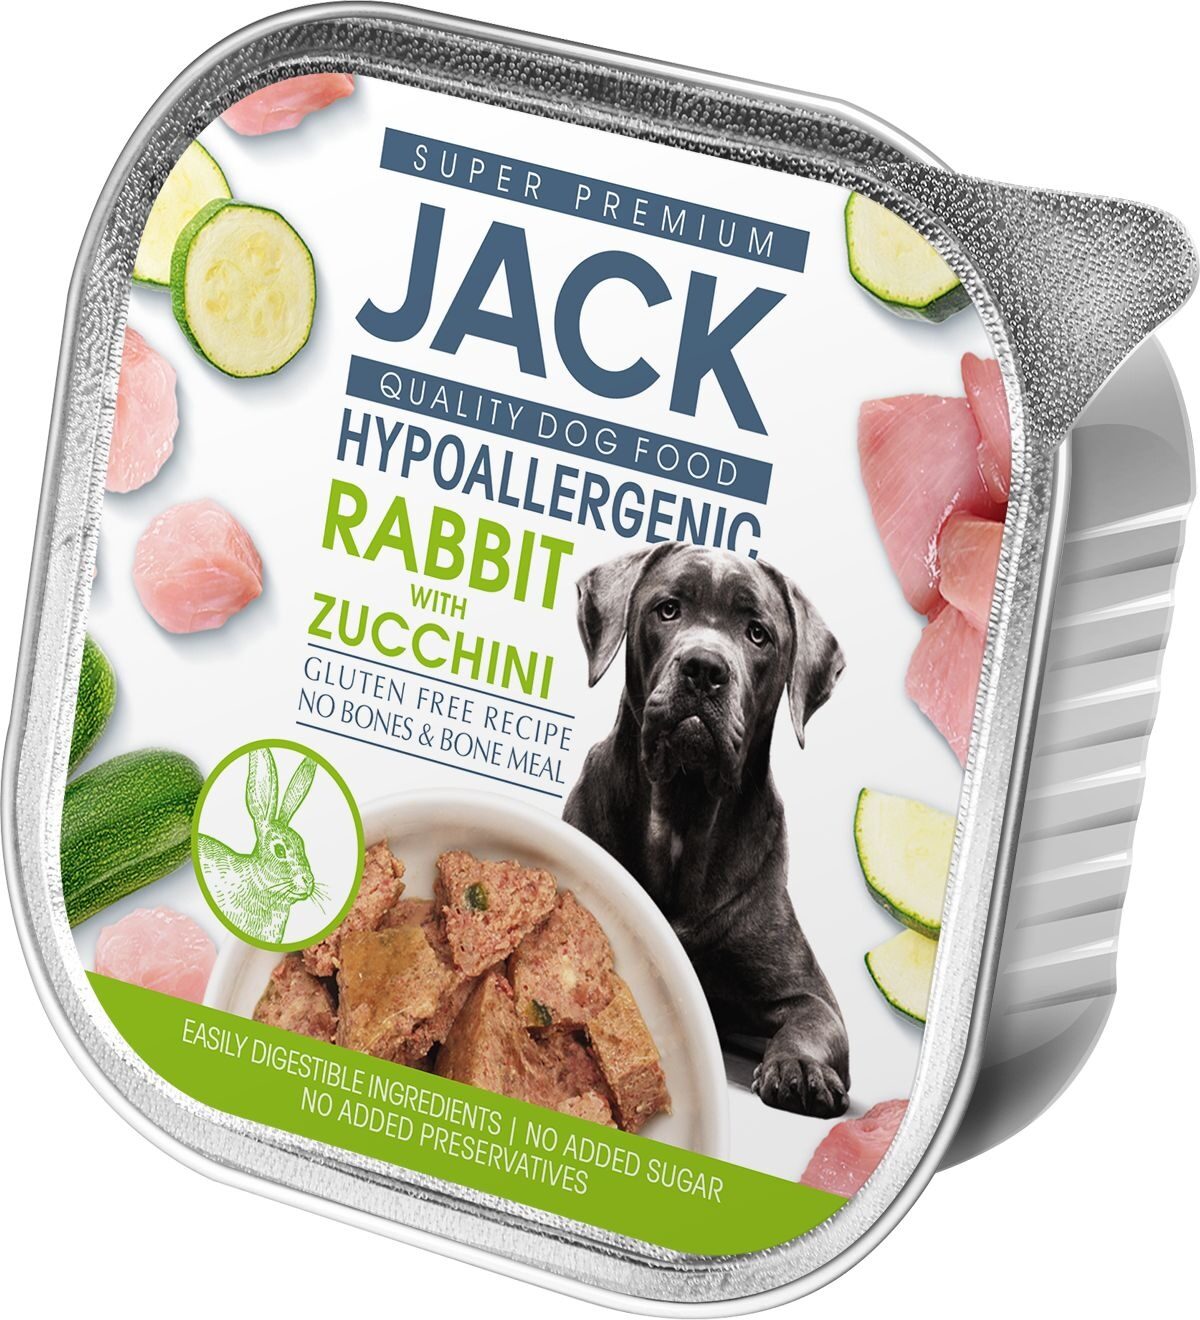 Jack hypoallergenic paté 150g rabbit with zucchini - Product - en